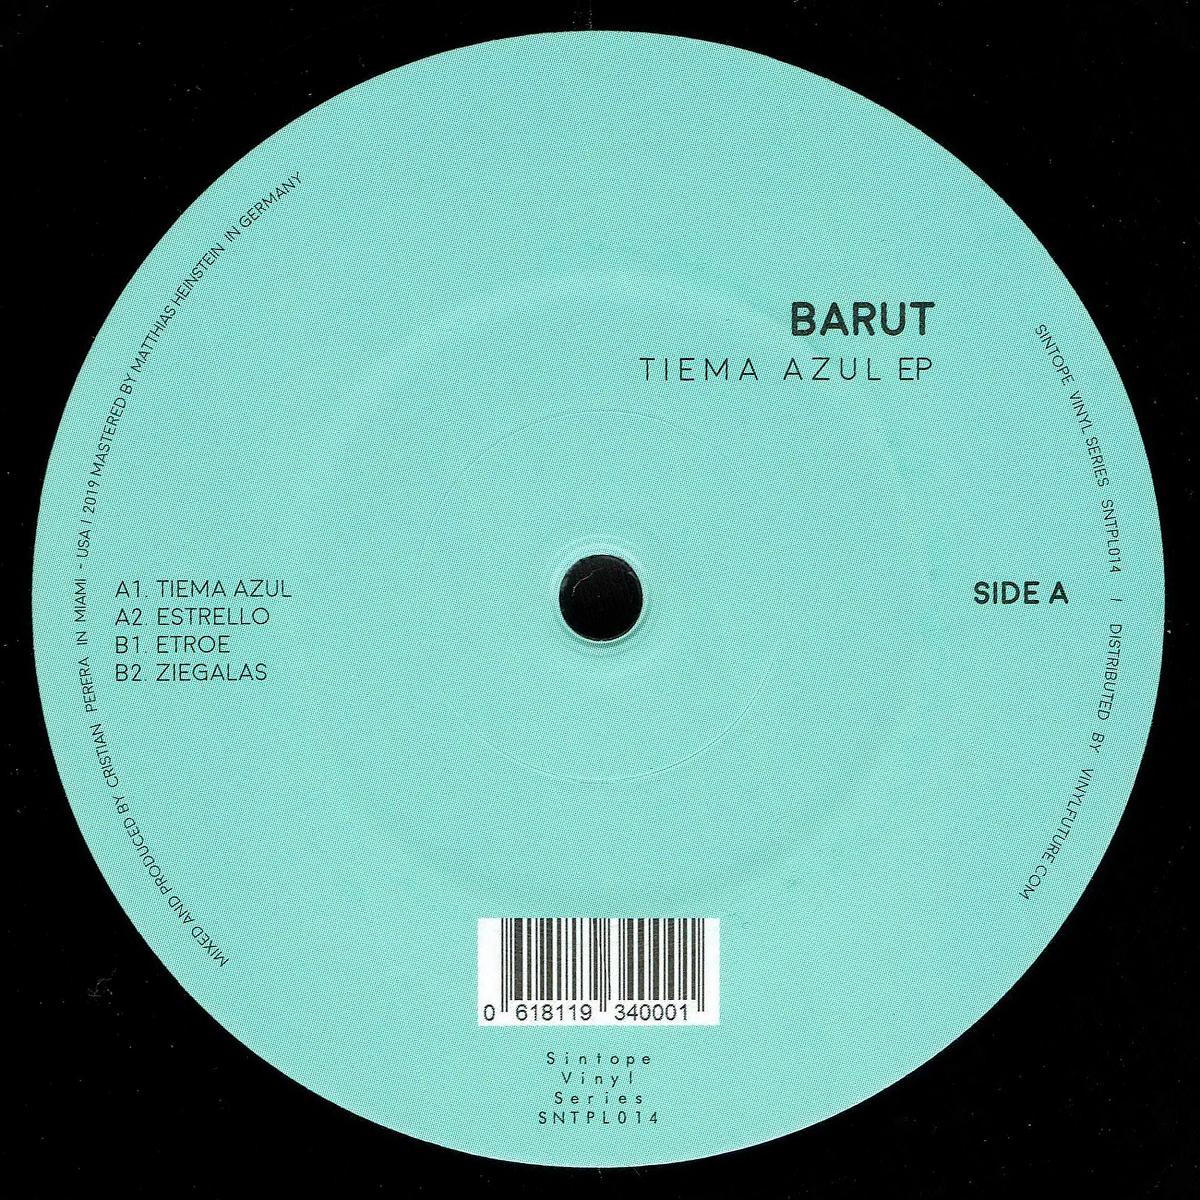 image cover: Barut - Tiema Azul EP / Sintope Vinyl Series